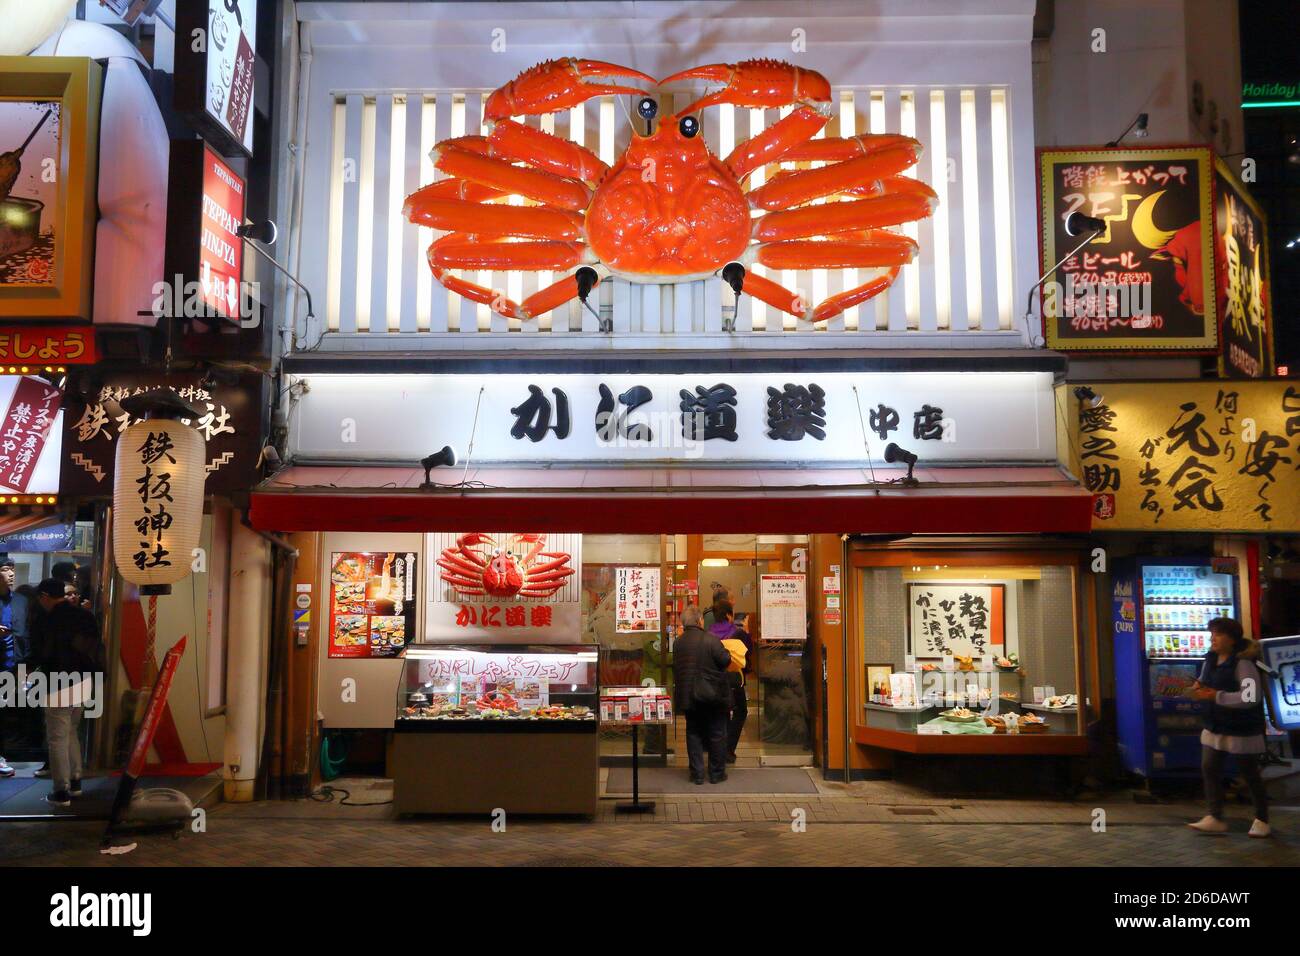 OSAKA, JAPAN - NOVEMBER 21, 2016: People visit the famous crab restaurant in Dotonbori street in Osaka, Japan. Dotonbori is the main entertainment are Stock Photo